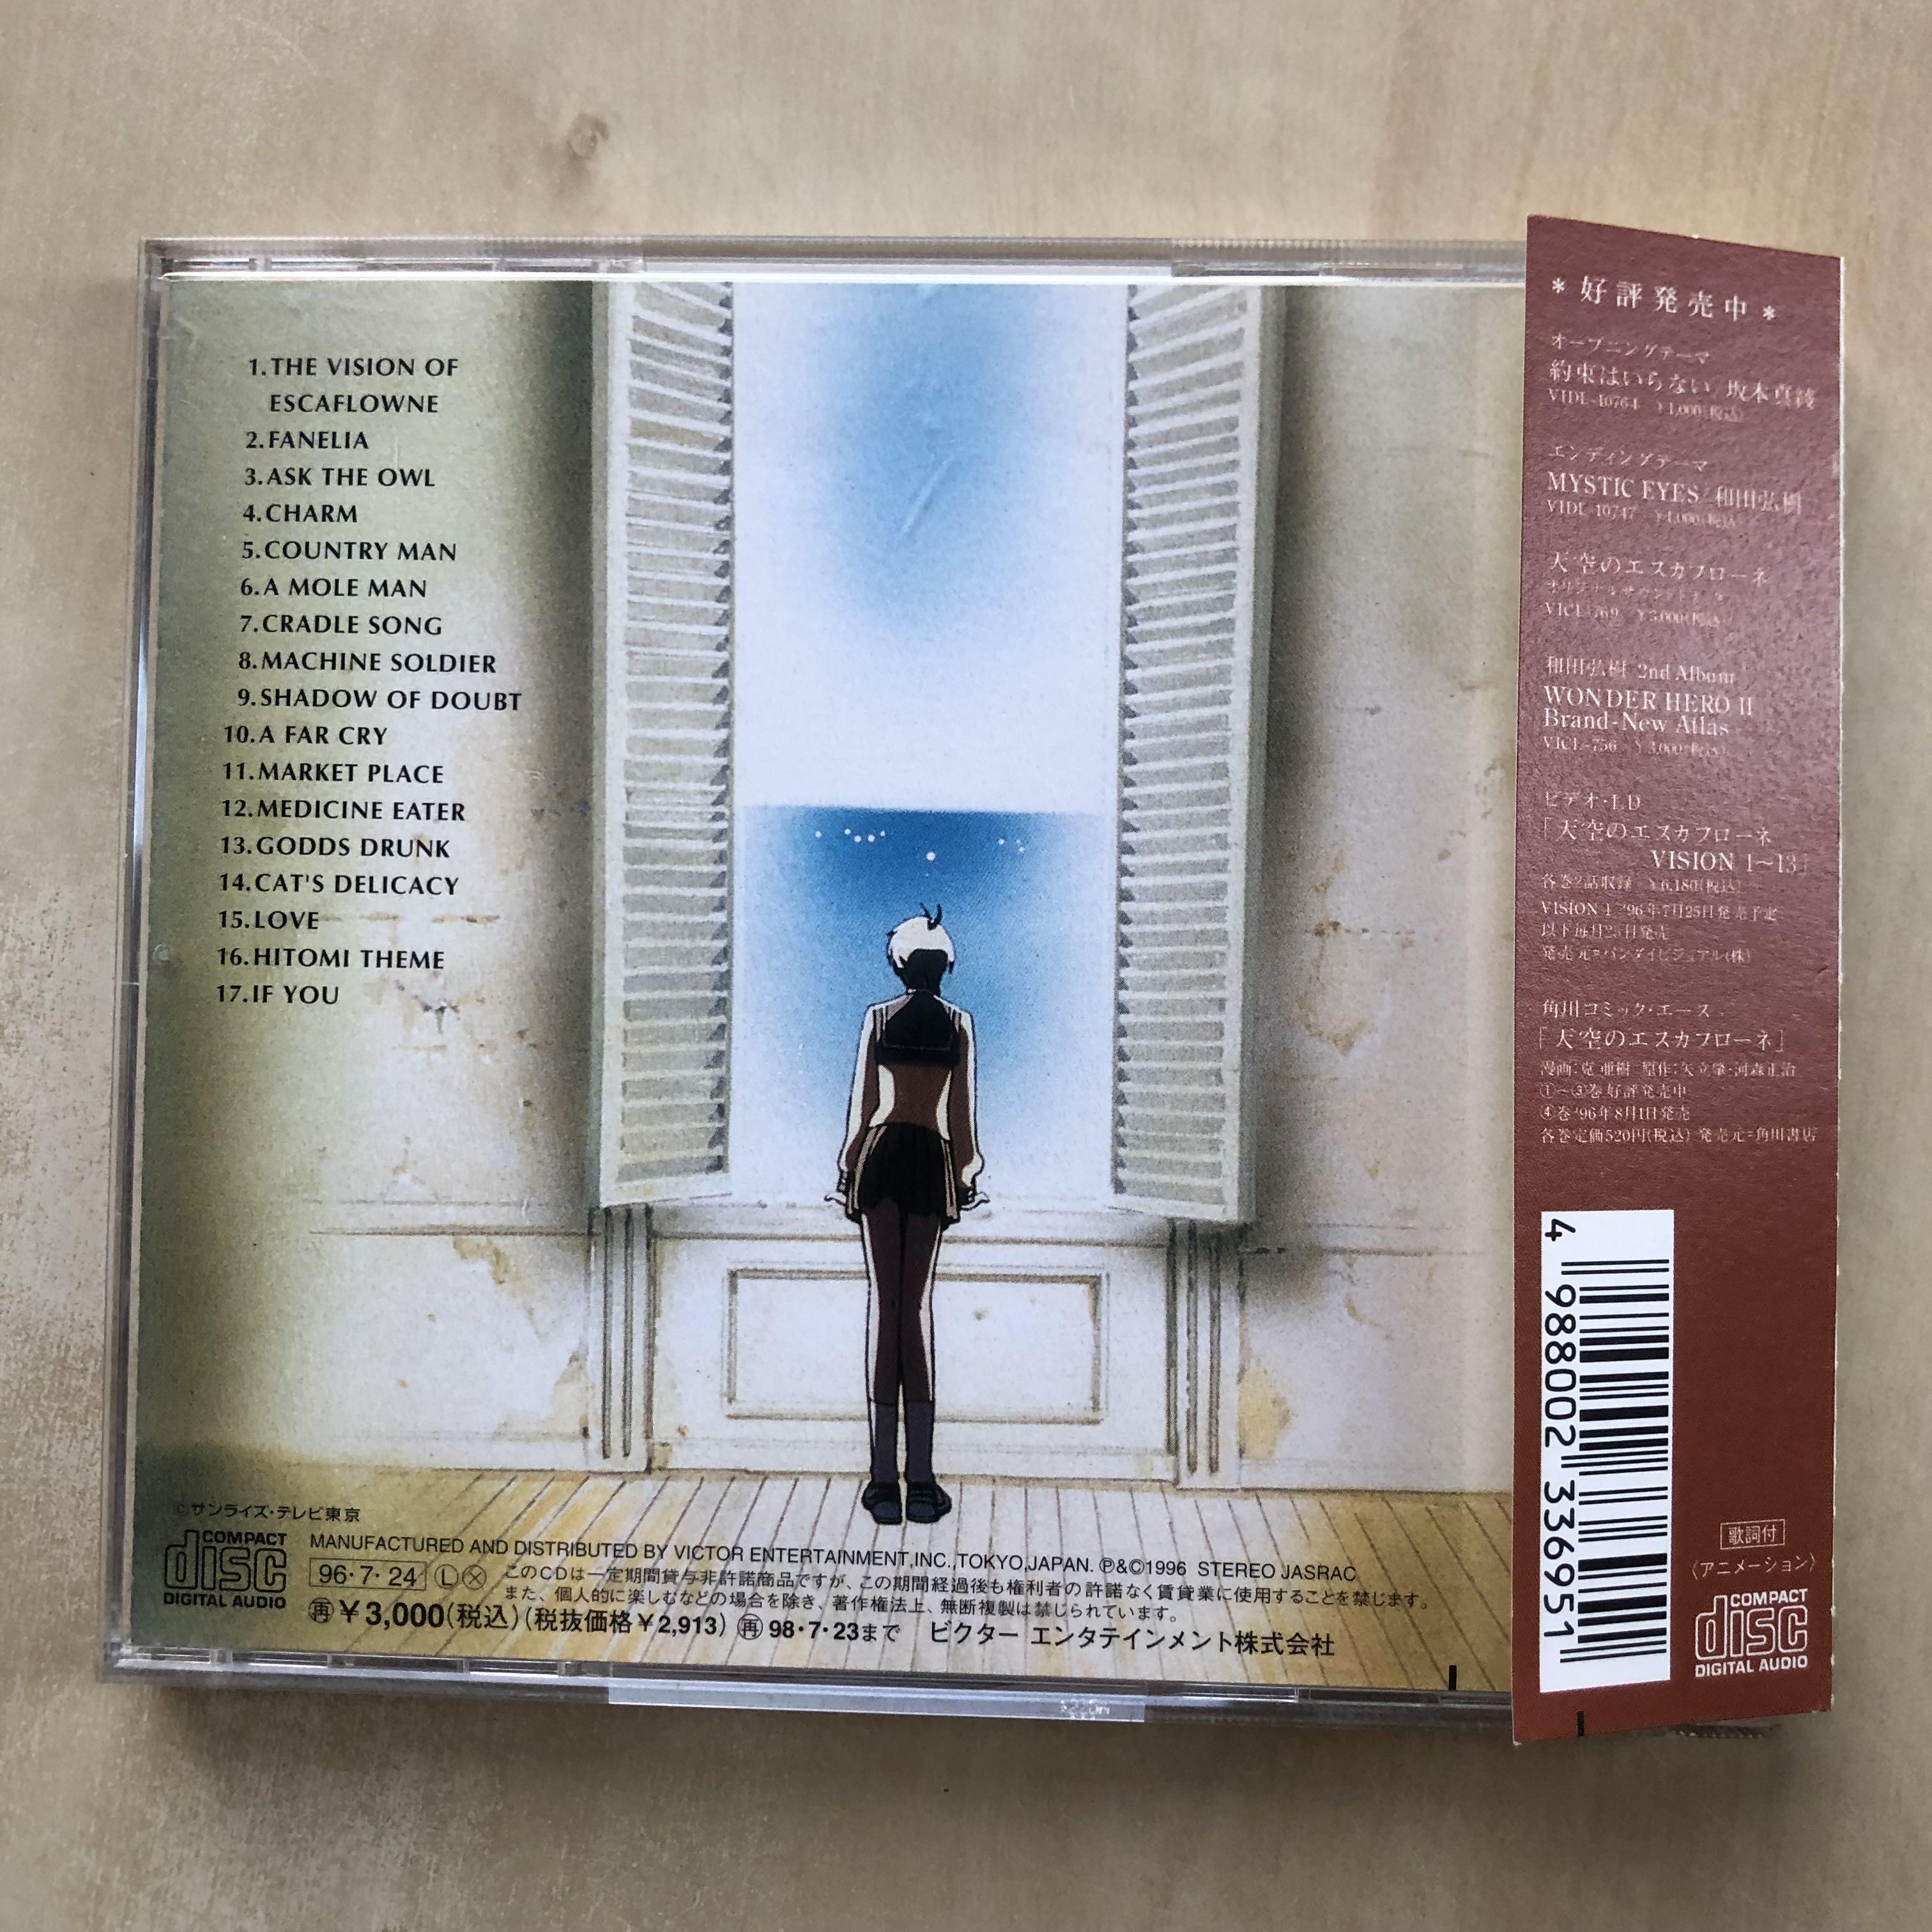 CD丨Escaflowne 聖天空戰記OST 2 / 天空のエスカフローネオリジナルサウンドトラック2